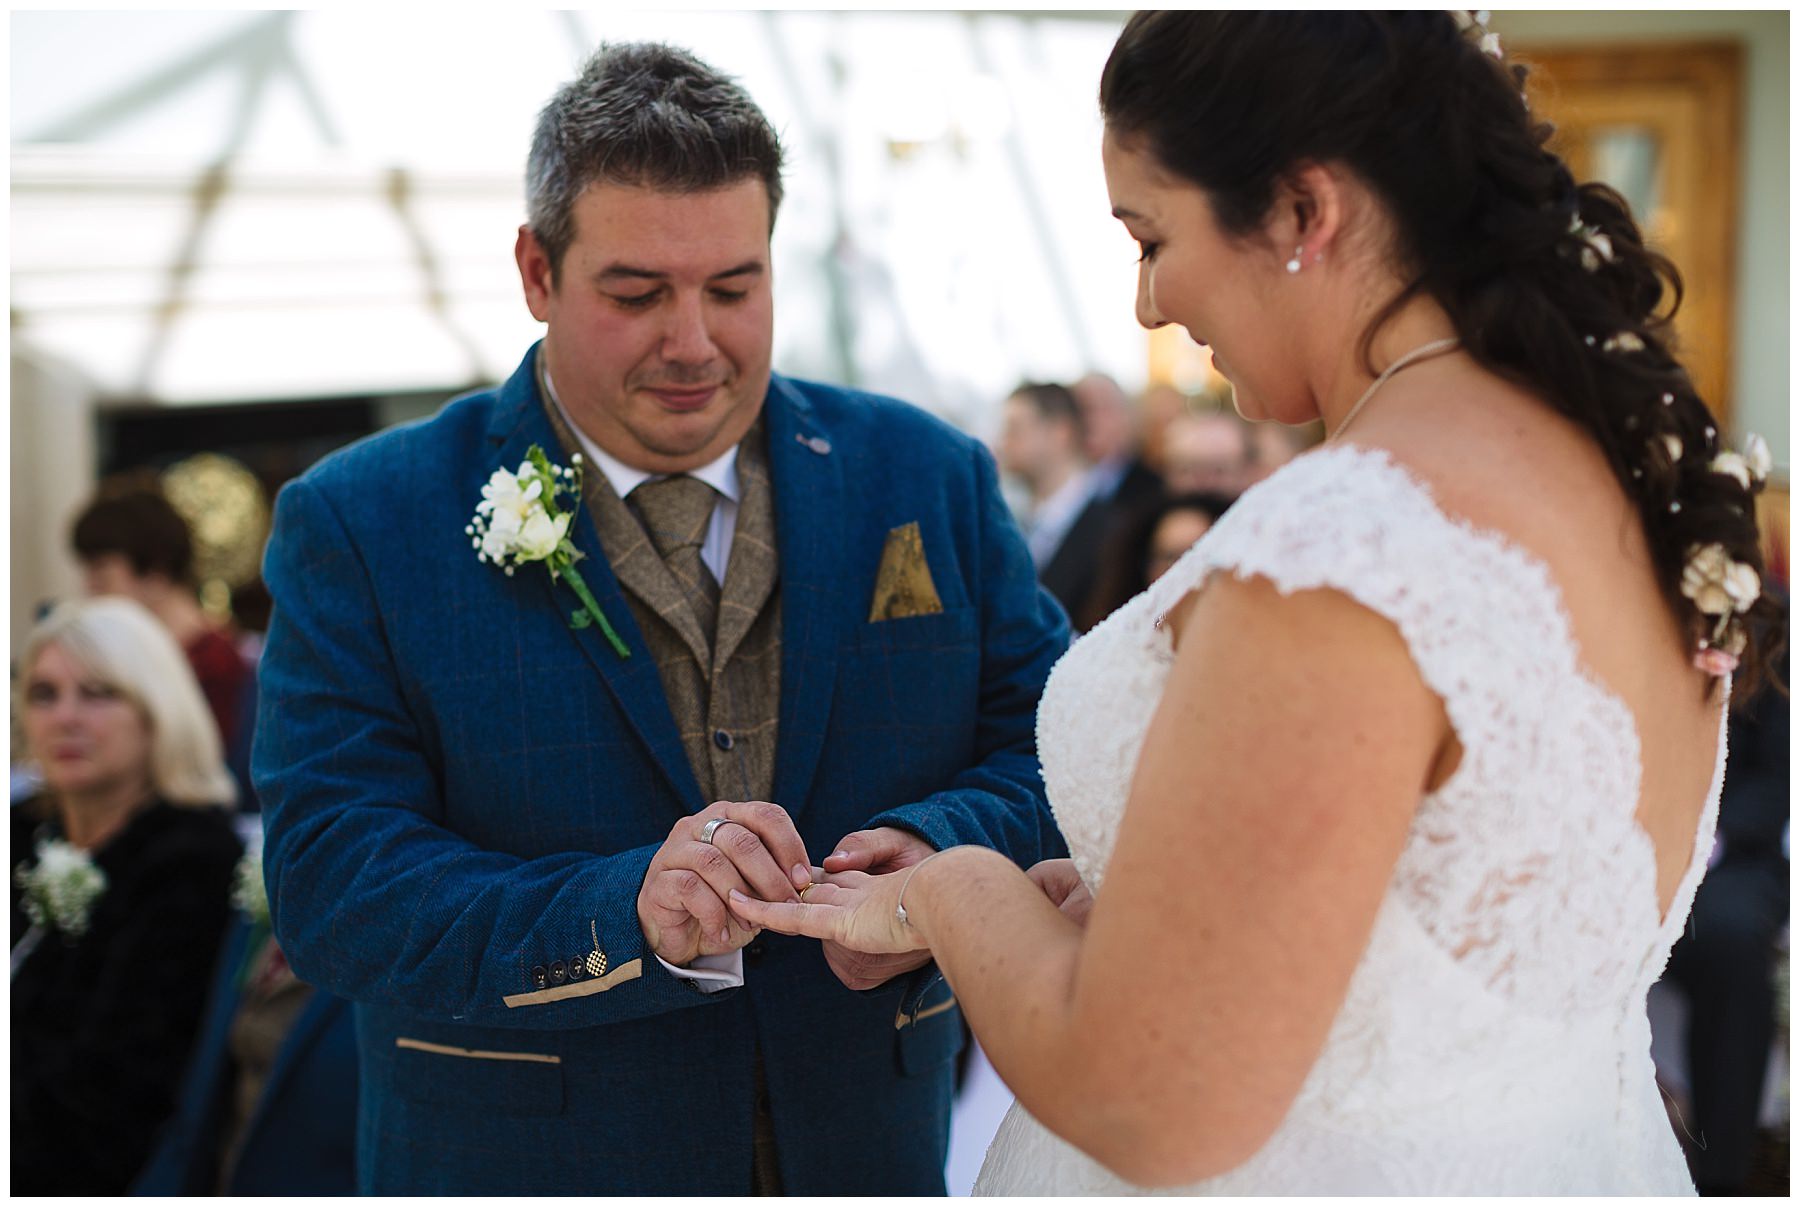 wedding ring exchange during willington hall wedding ceremony